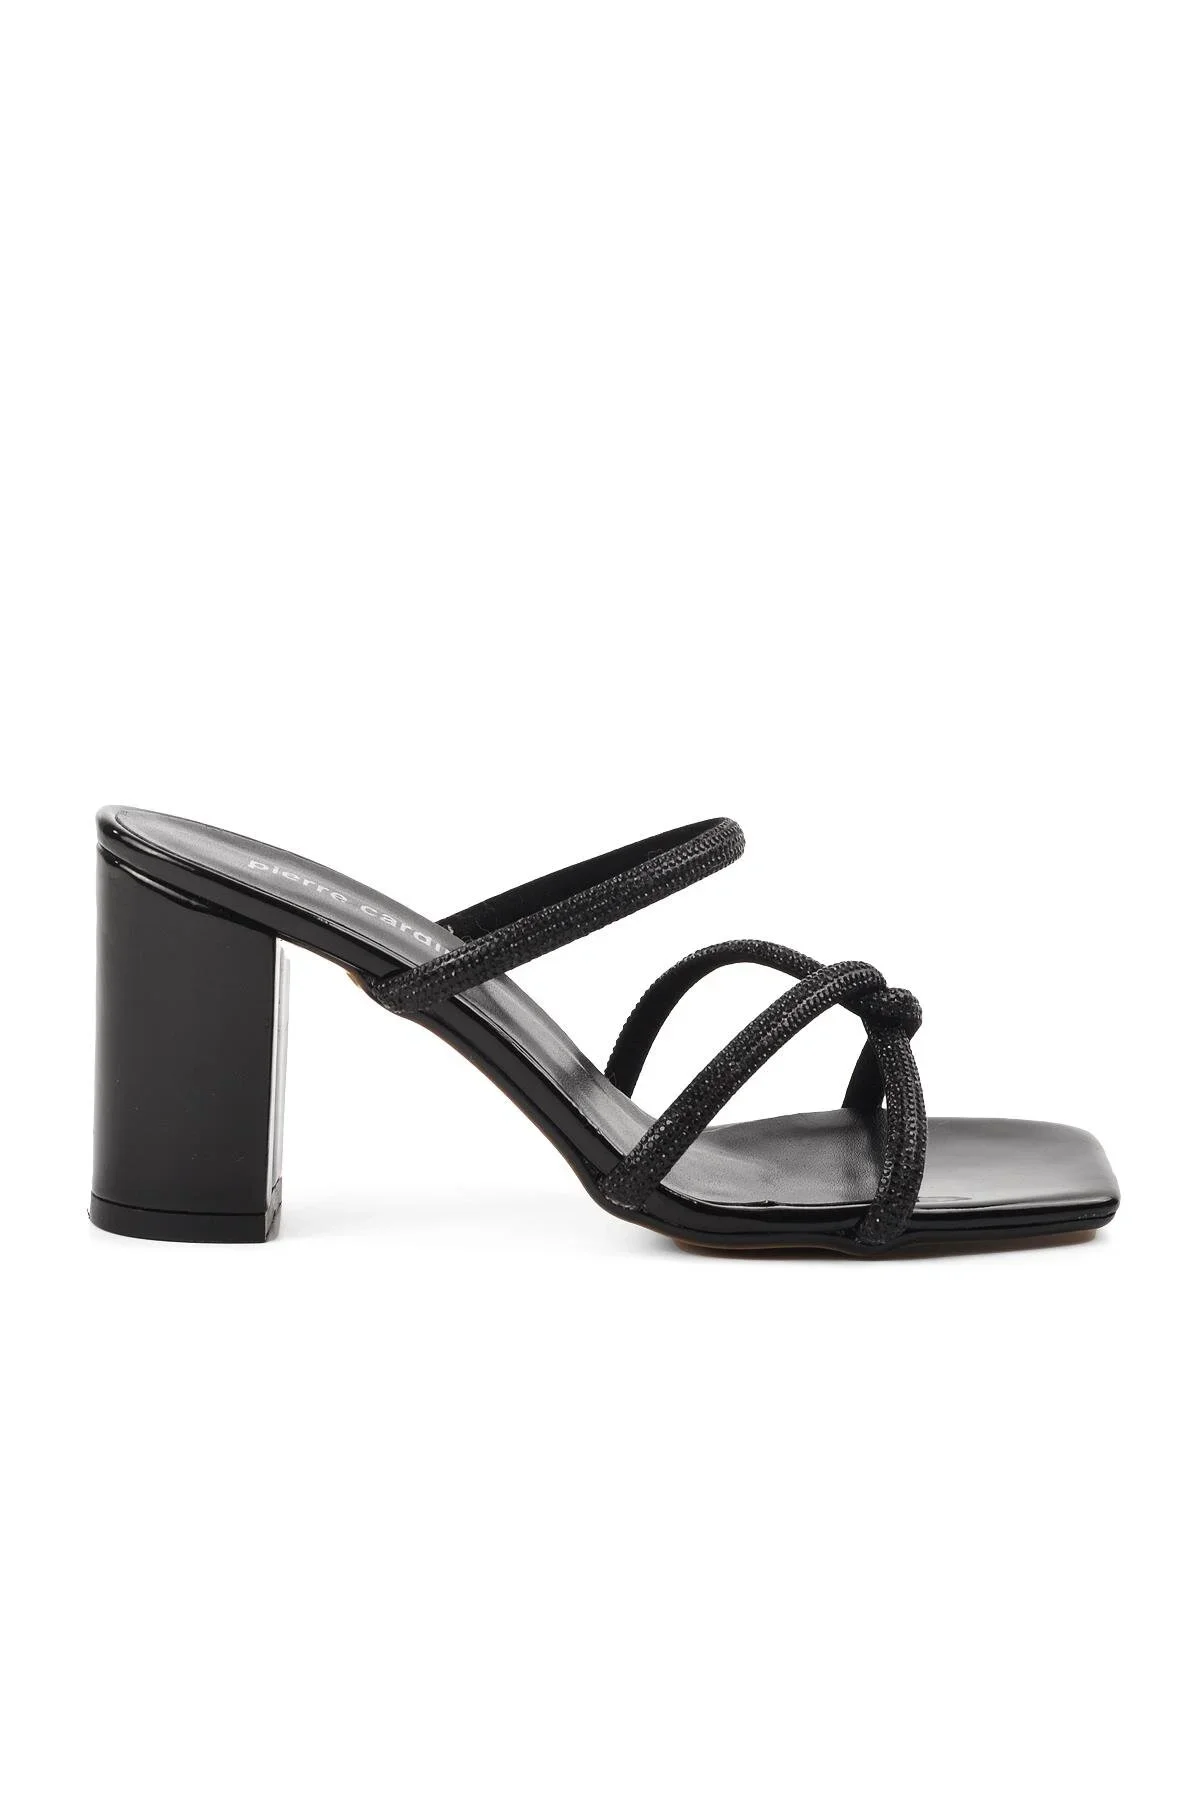 Kadın Topuklu Ayakkabı PC-52218-Siyah - 2